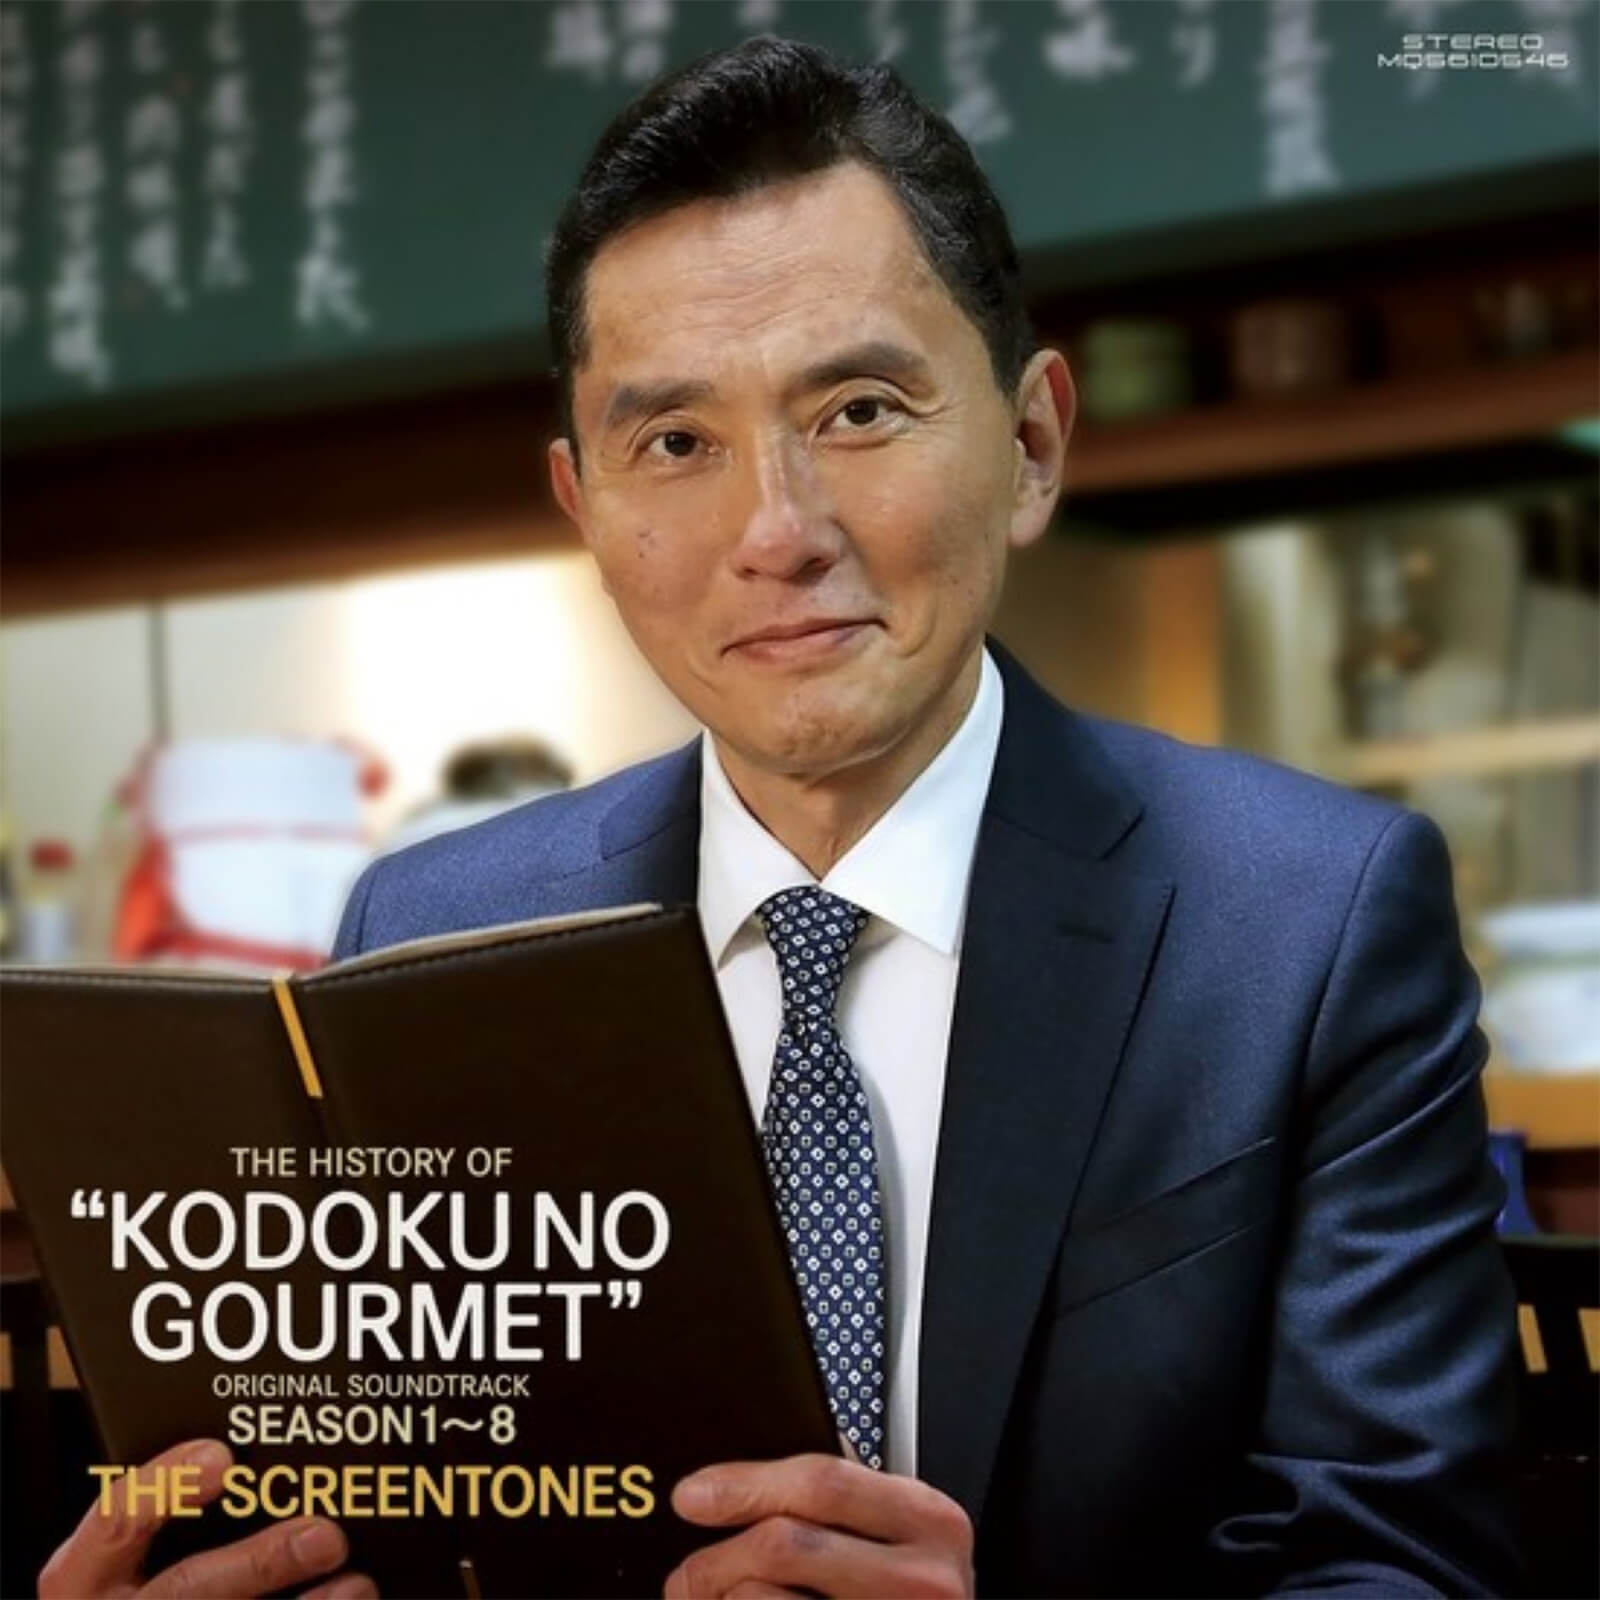 The History Of Kodoku No Gourmet (Original Soundtrack Season 1~8) LP